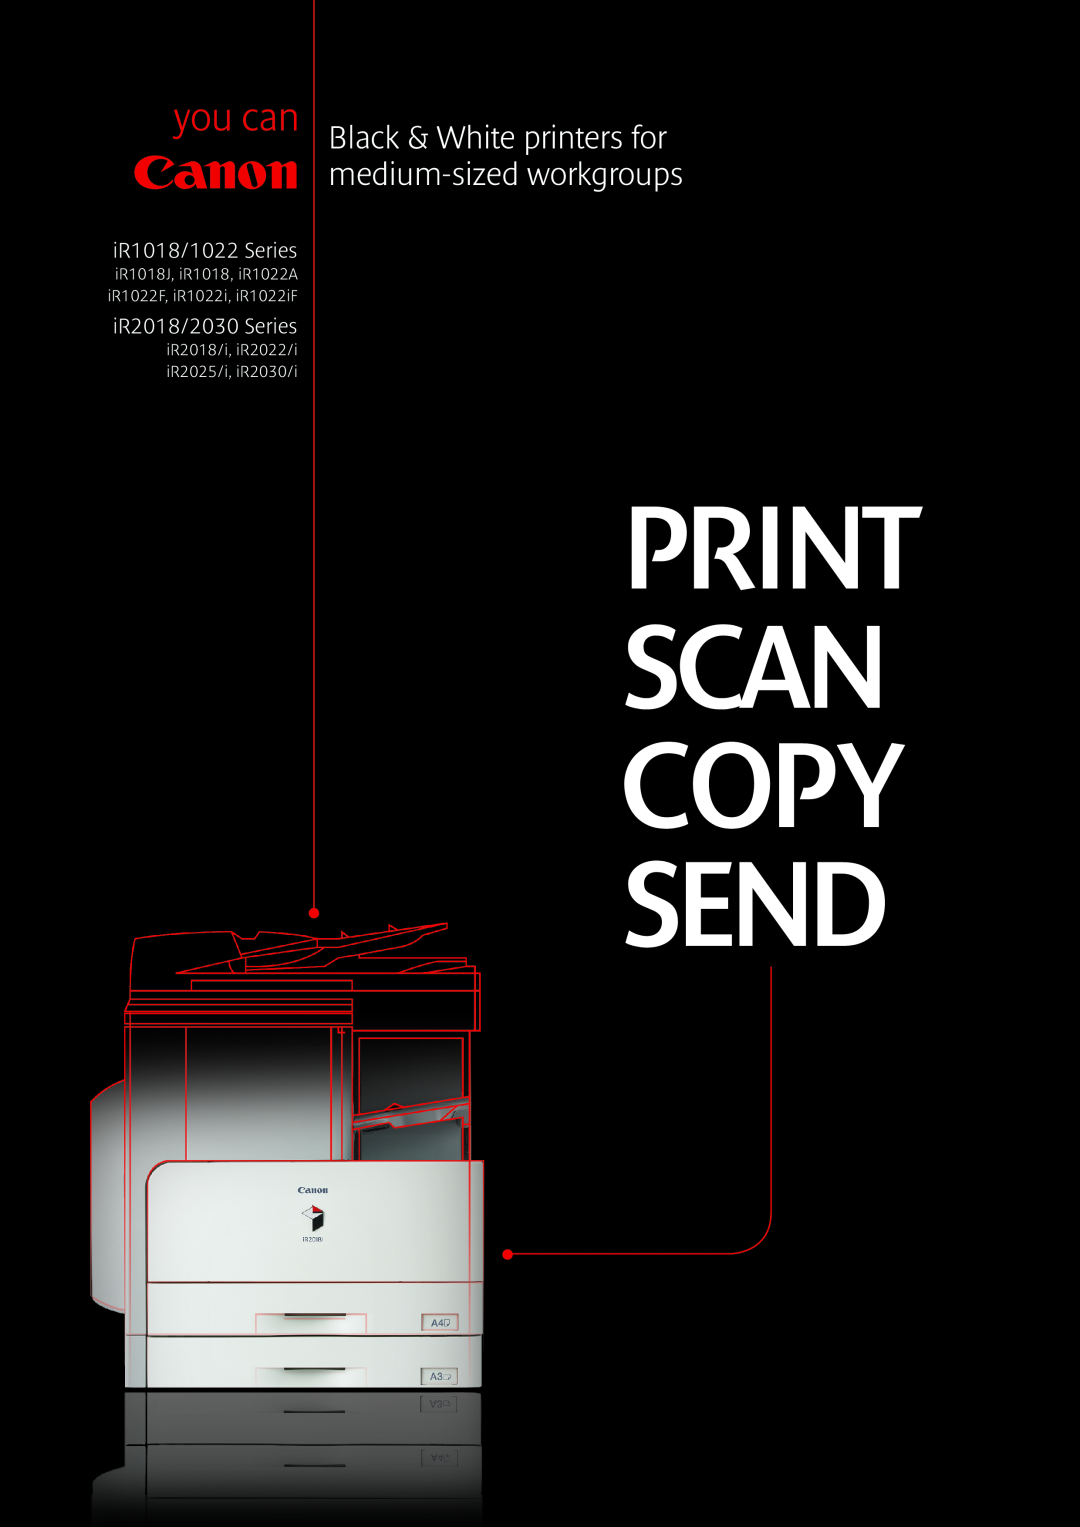 Canon IR1018J manual Copy Send, Print Scan, Black & White printers for medium-sized workgroups, iR1018/1022 Series 